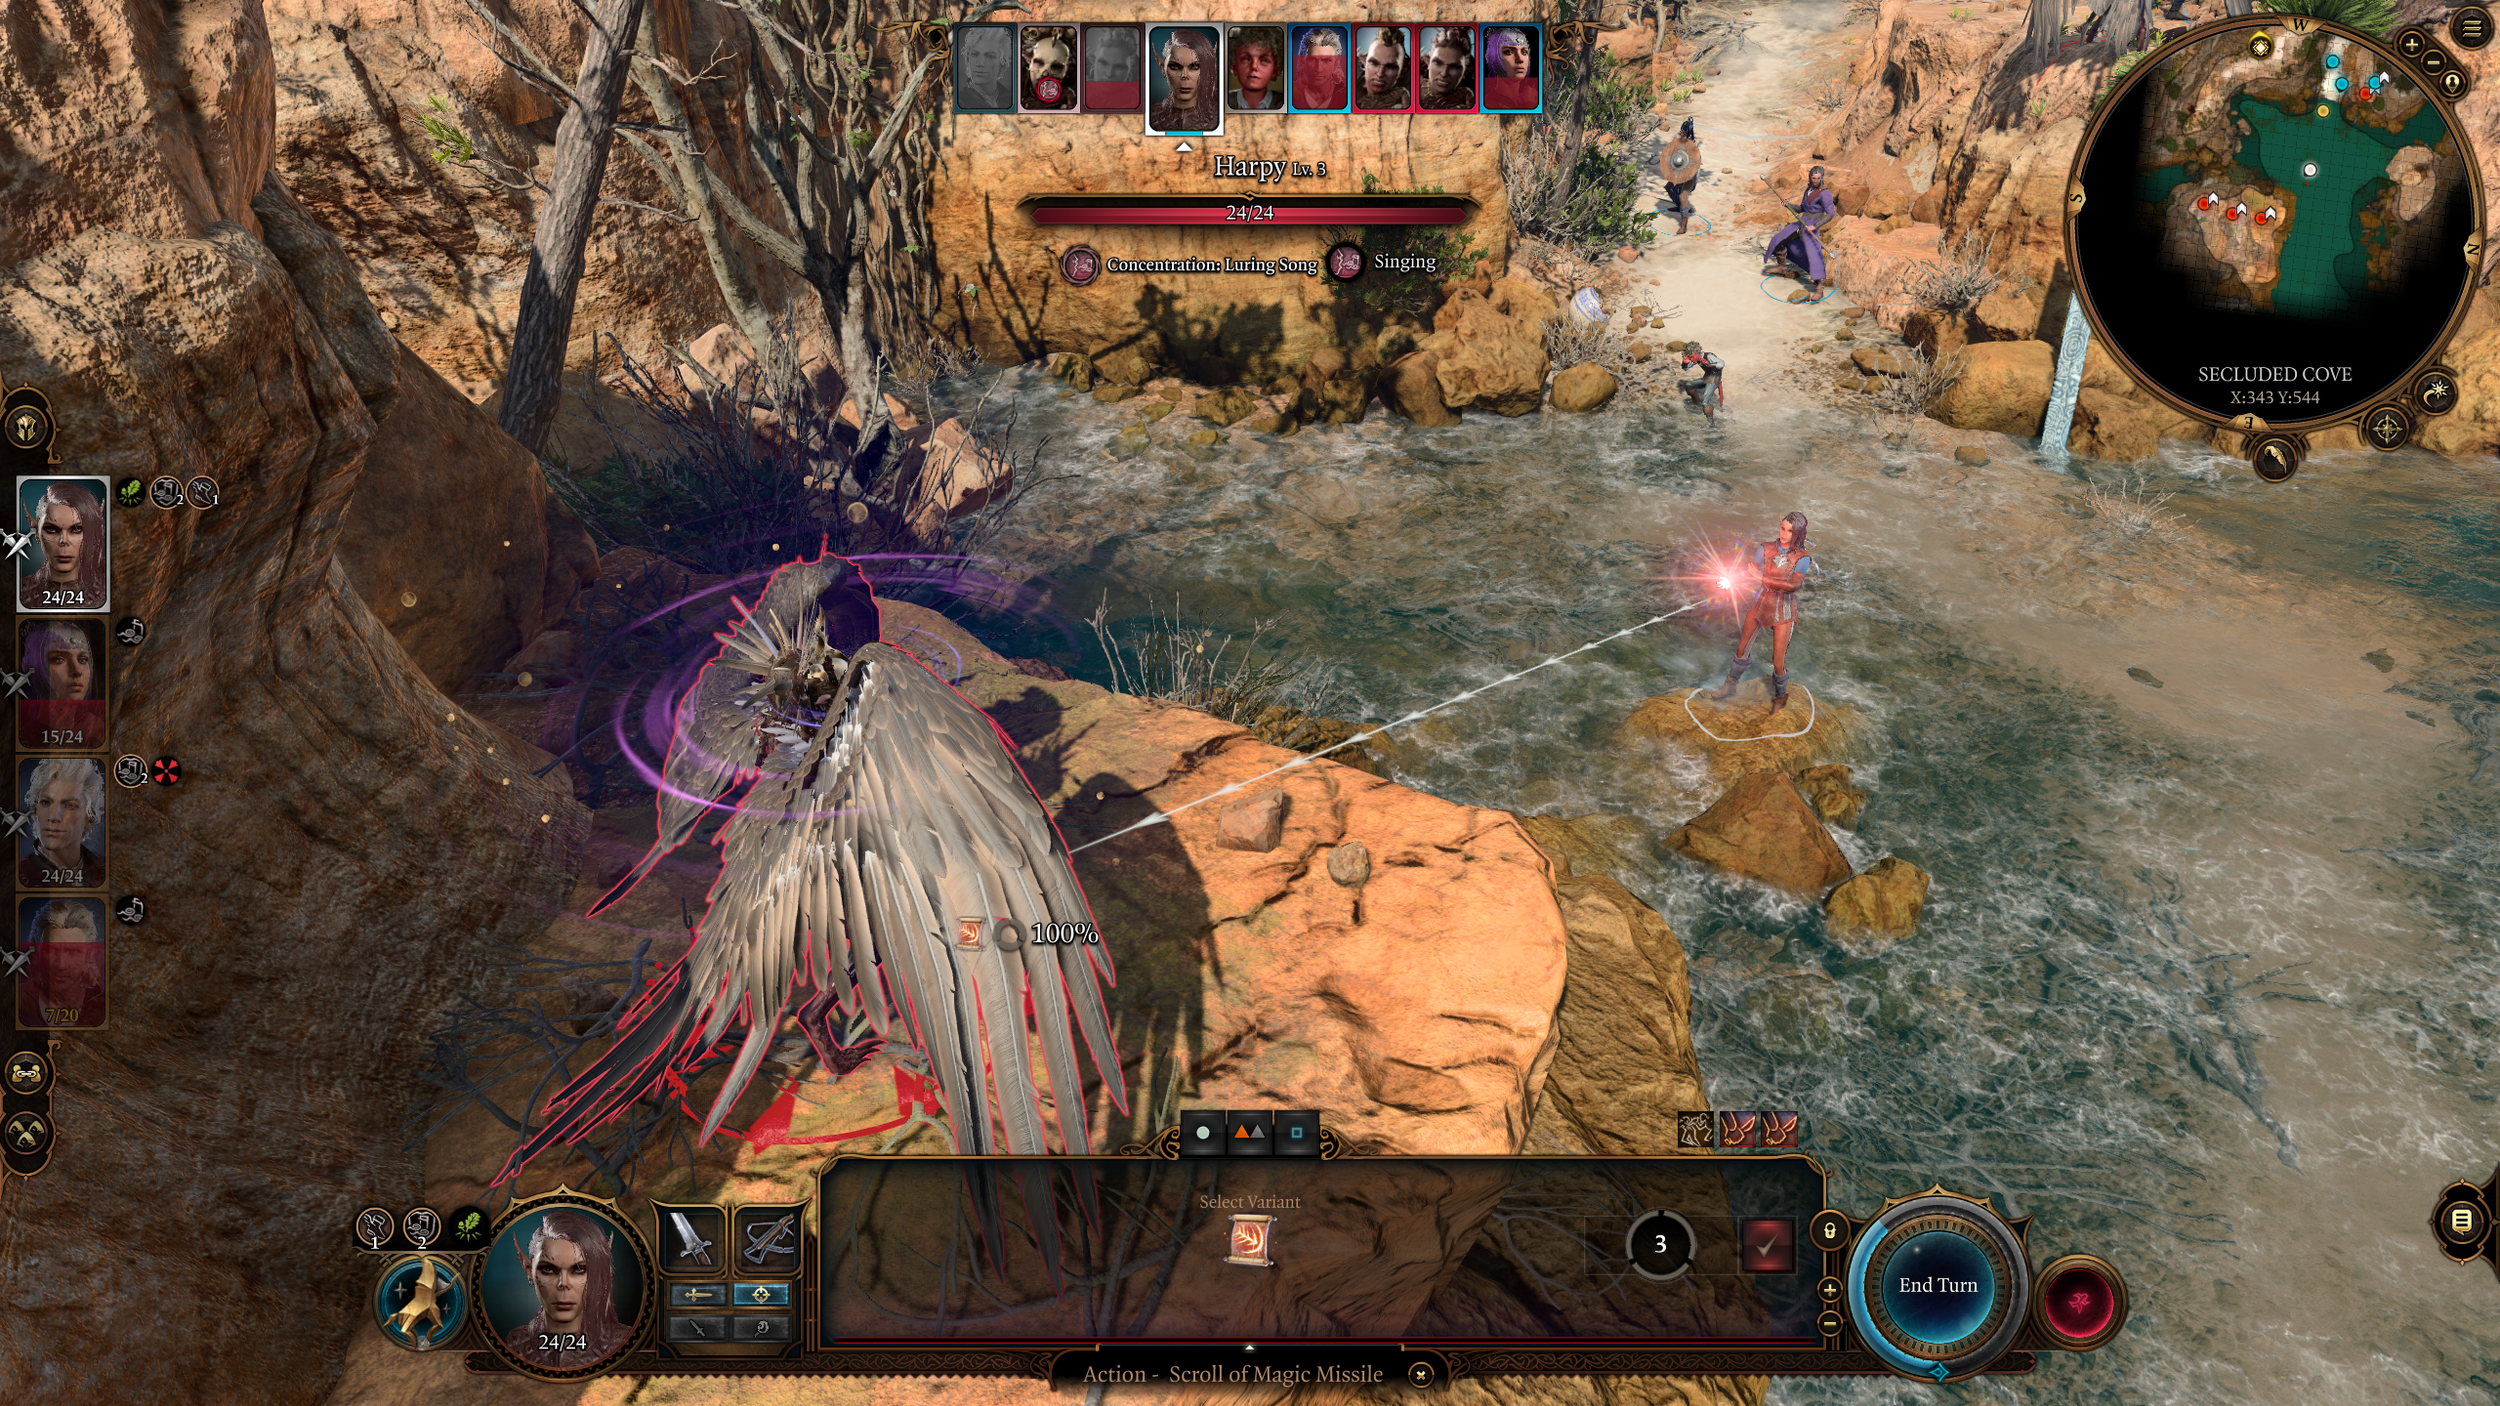 Baldur's Gate 3: Best Wizard build in BG3 - Dot Esports